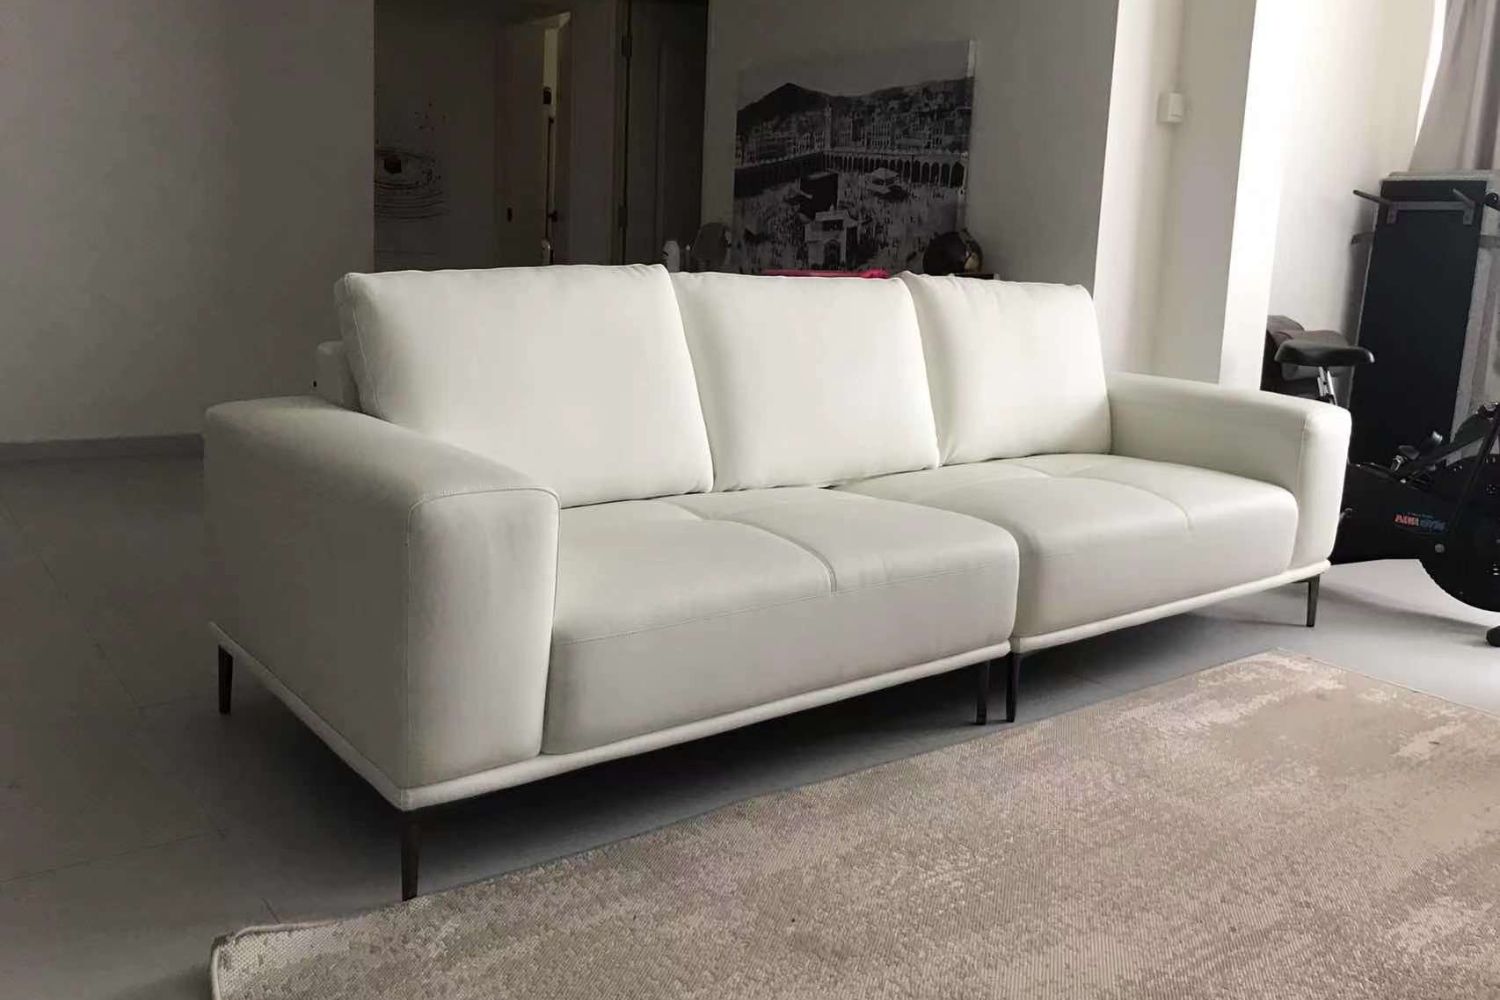 Calm 260cm white half leather sofa in customer's living room